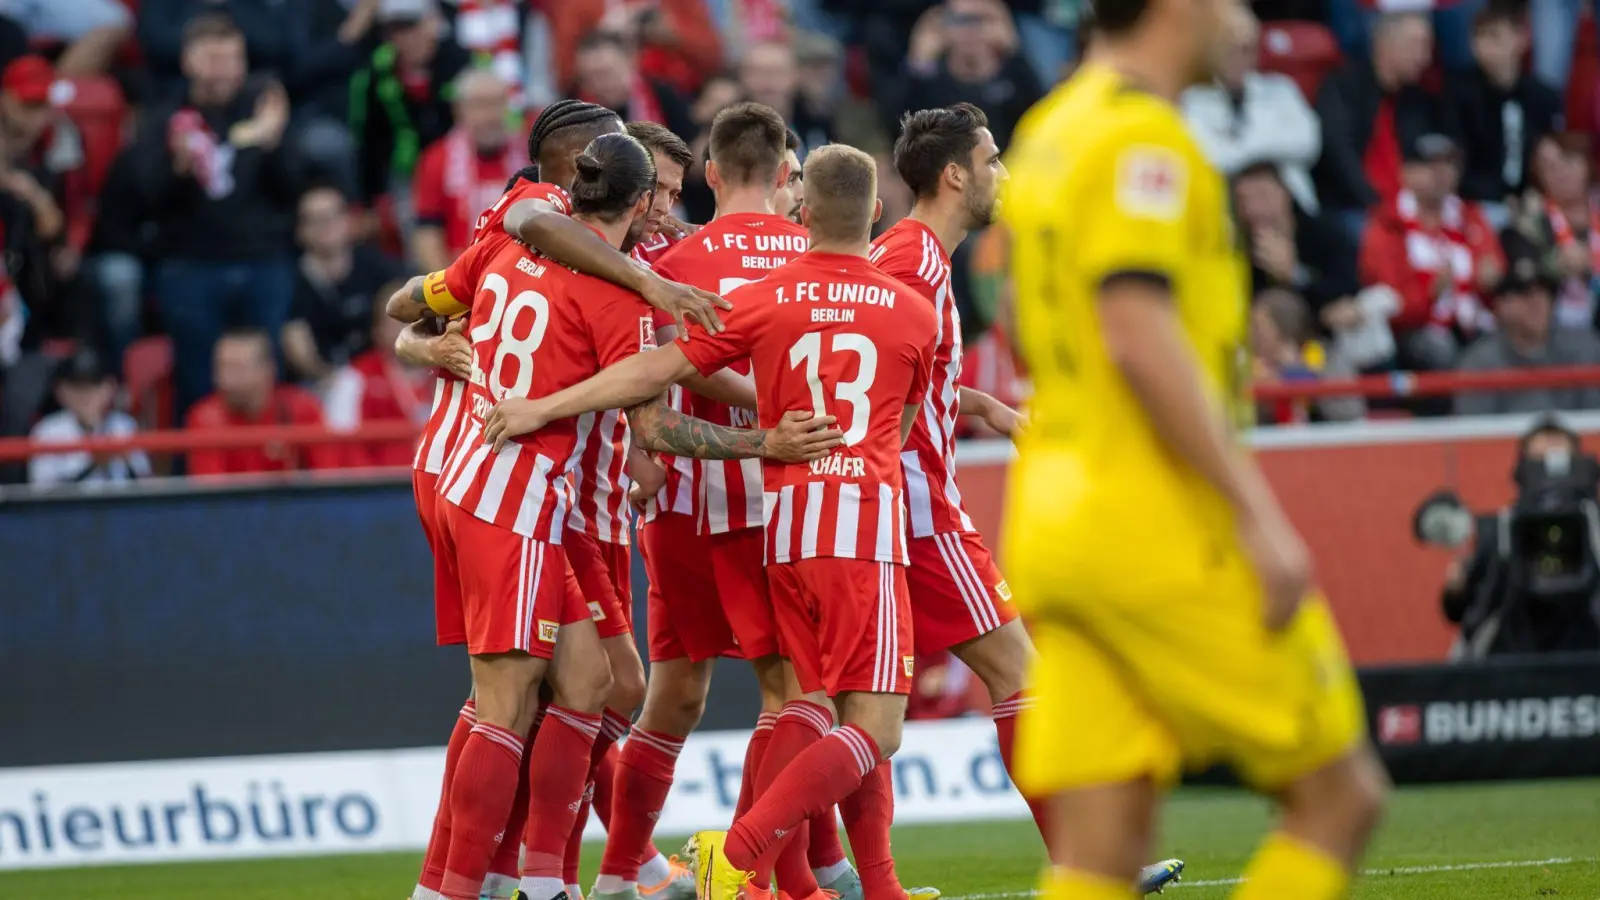 Unions Spieler jubeln nach dem Treffer zum 1:0 gegen Borussia Dortmund. (Foto: Andreas Gora/dpa)